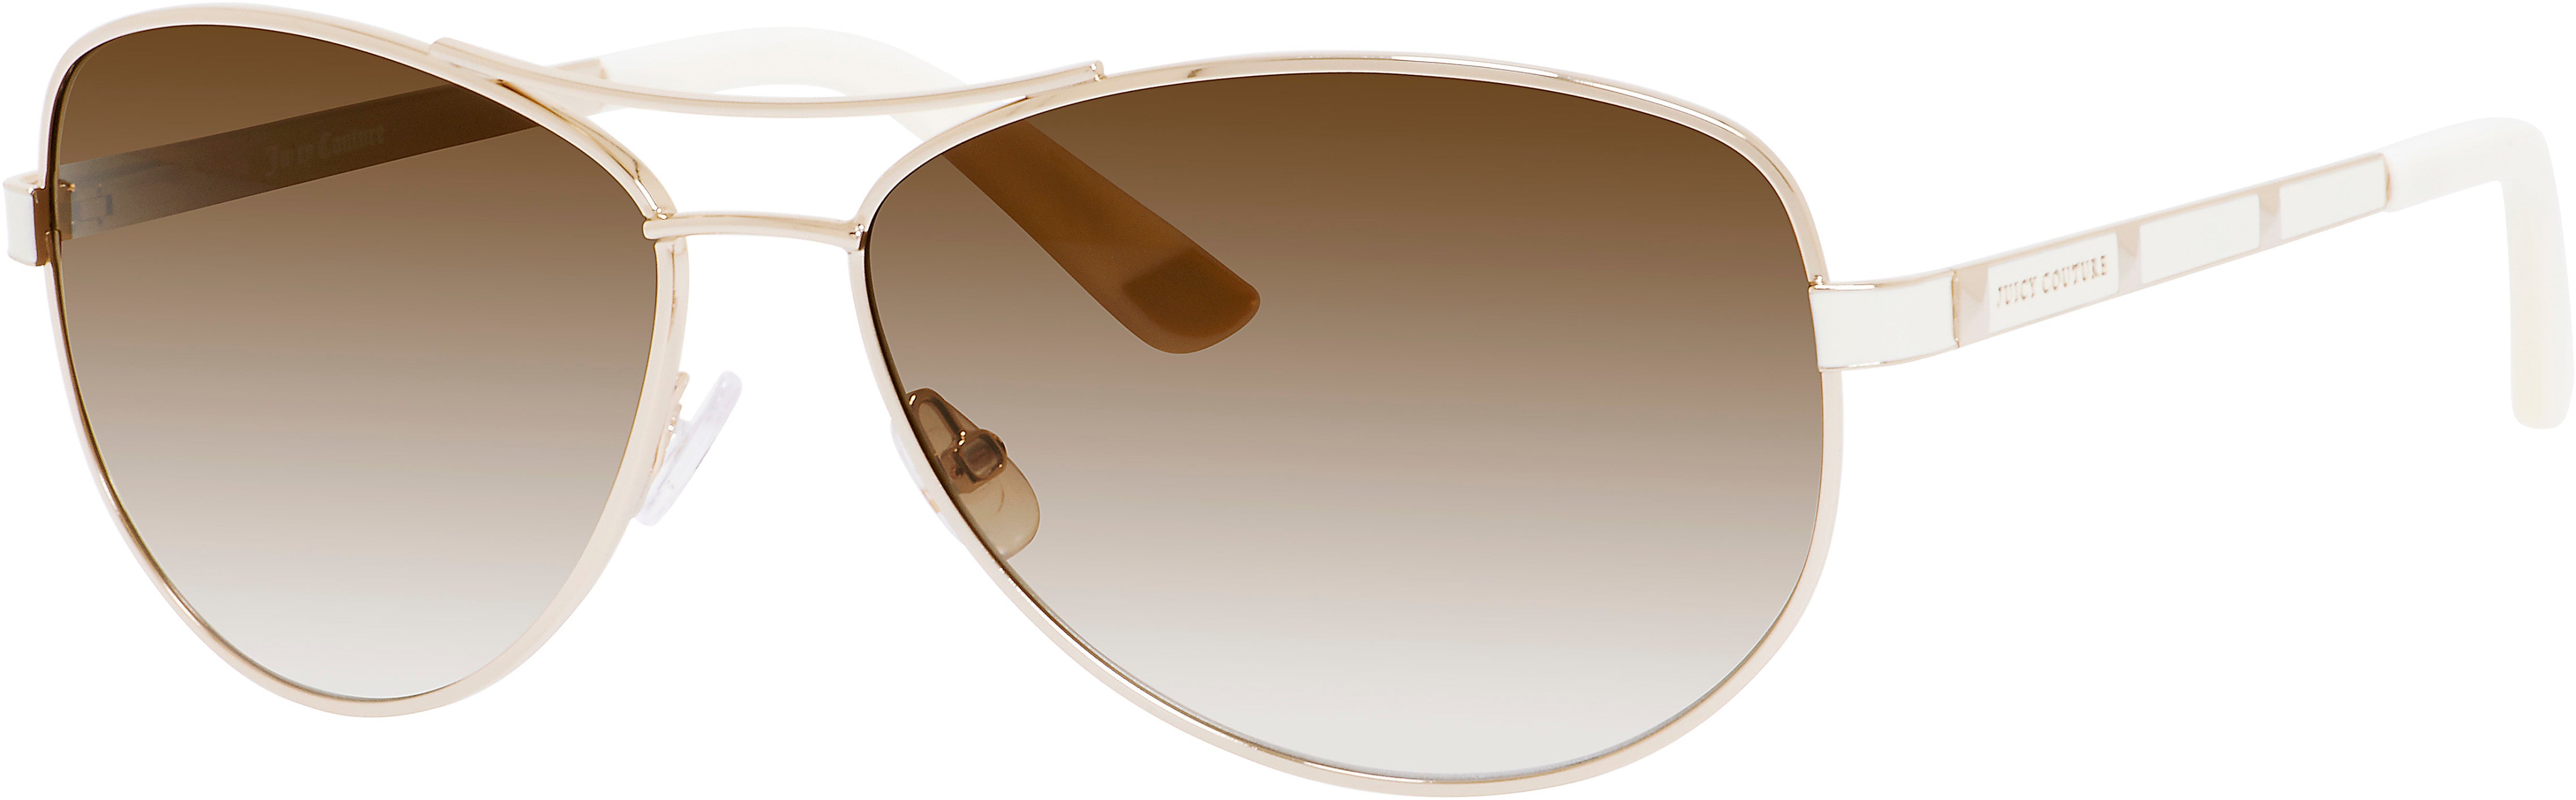 Juicy Couture Juicy 554/S Aviator Sunglasses 03YG-03YG  Light Gold (Y6 Brown Gradient)